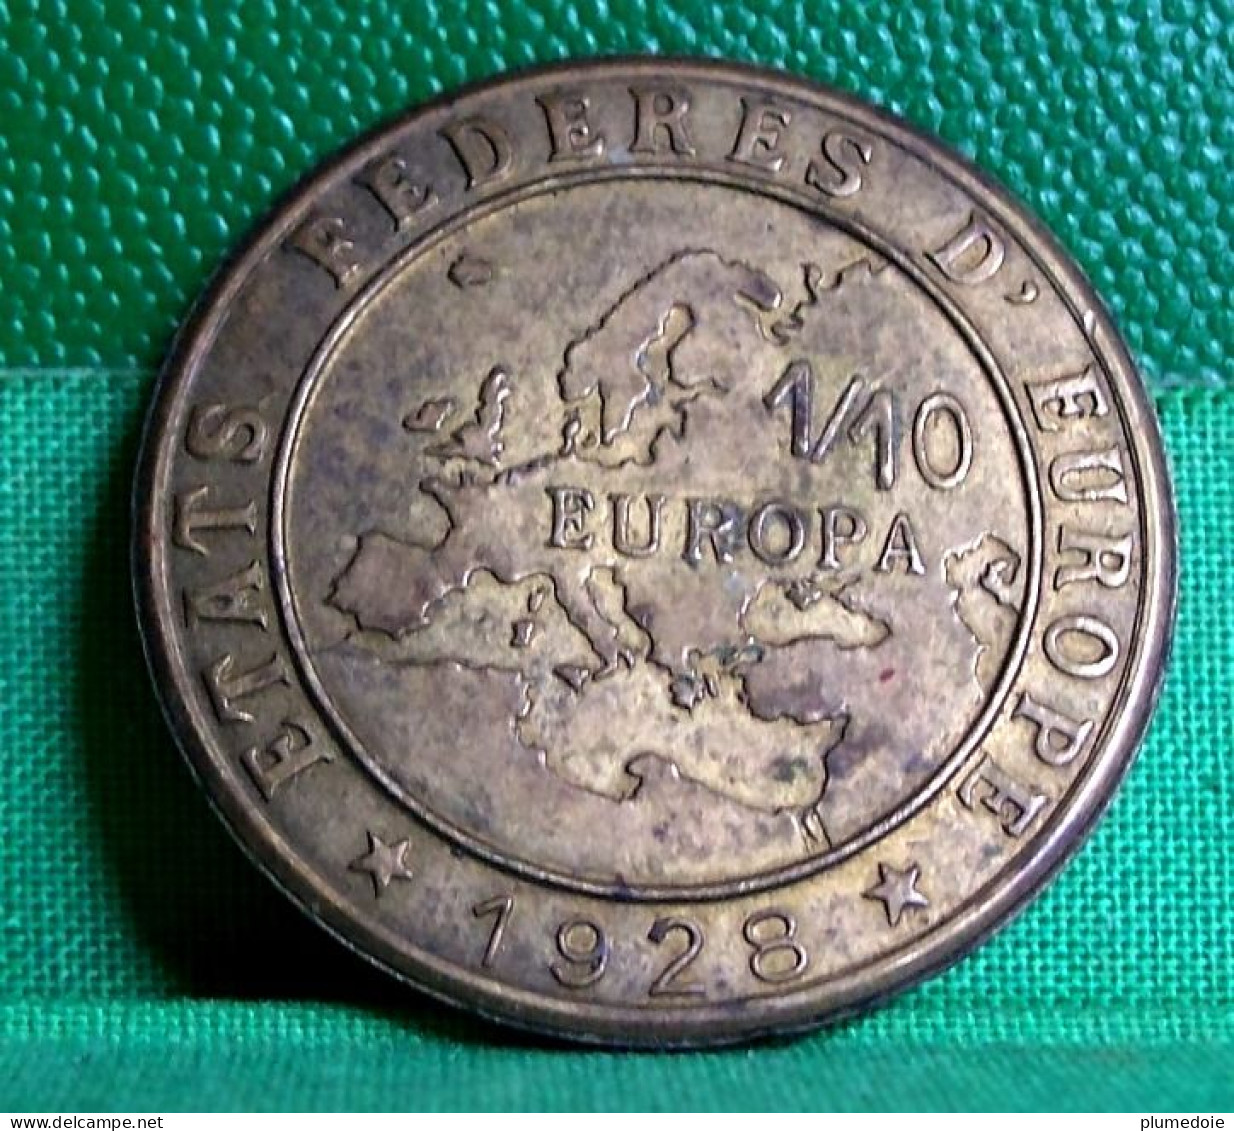 MONNAIE 1 / 10  EUROPA Louis Pasteur - 1928 Bronze  , ETATS FEDERES D'  EUROPE , RARE FRANCE COIN - Errores Y Curiosidades